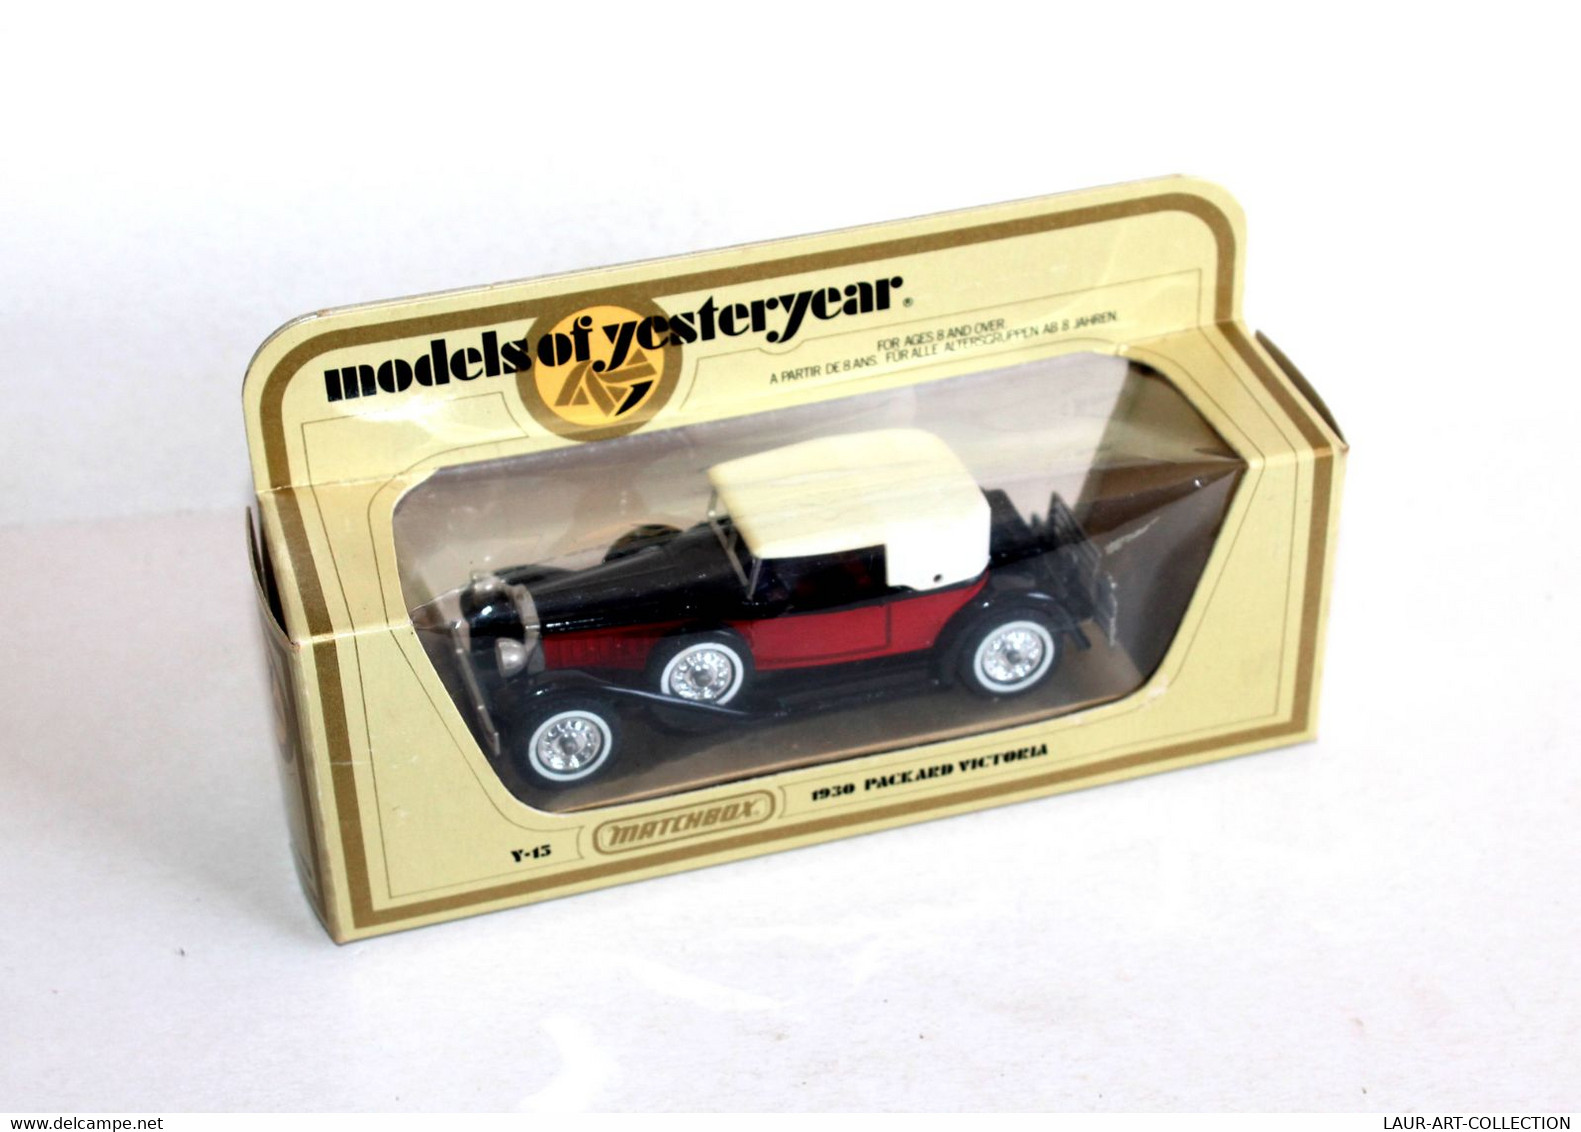 MATCHBOX, MODELS OF YESTERYEAR - Y-15 PACKARD VICTORIA 1930, MINIATURE 1/46 AUTO - MODELE REDUIT DE COLLECTION (2502.67) - Matchbox